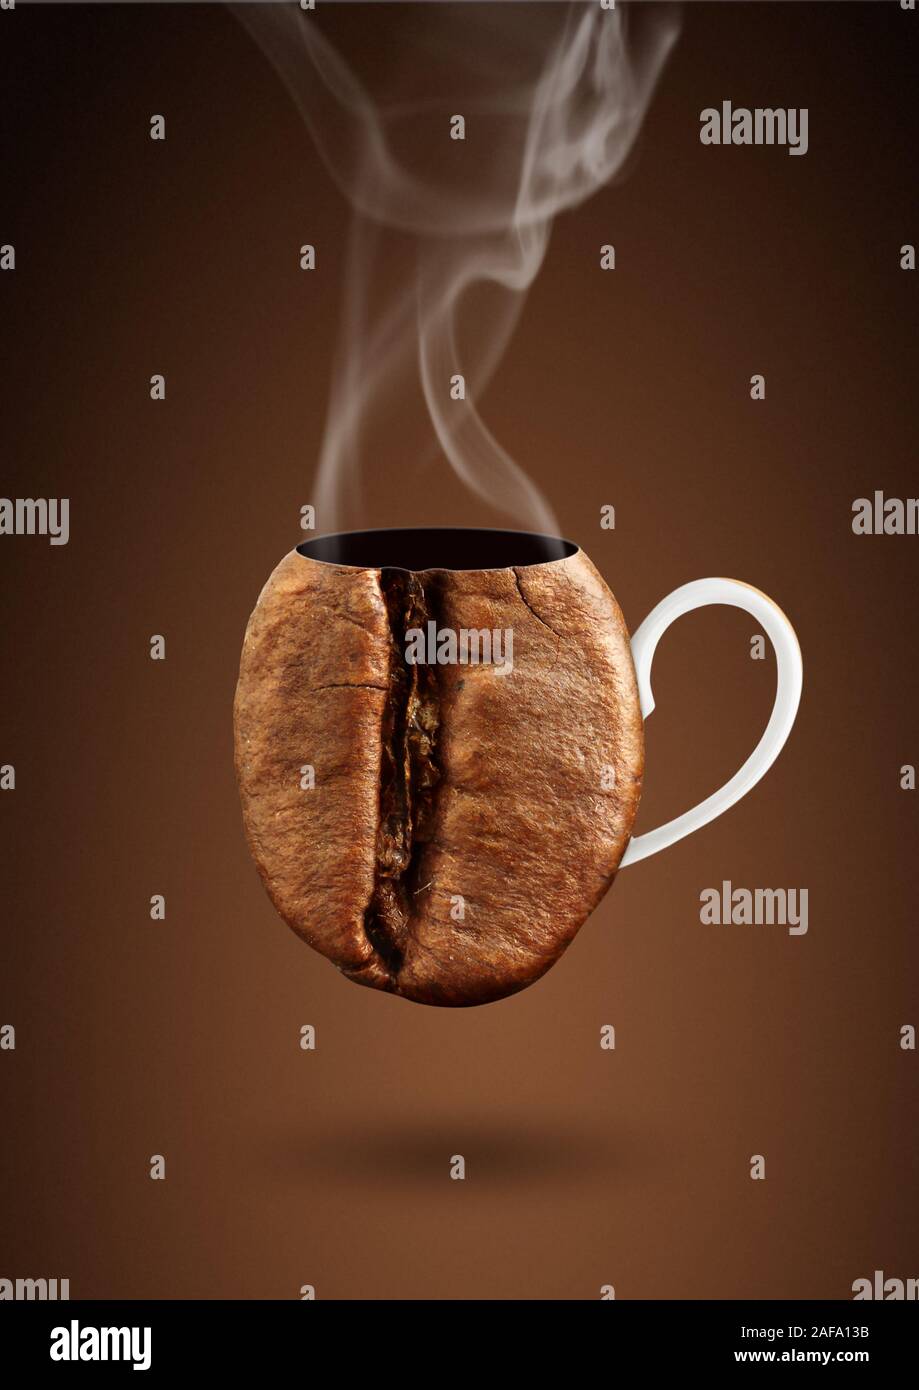 El concepto creativo de café, granos de café Foto de stock